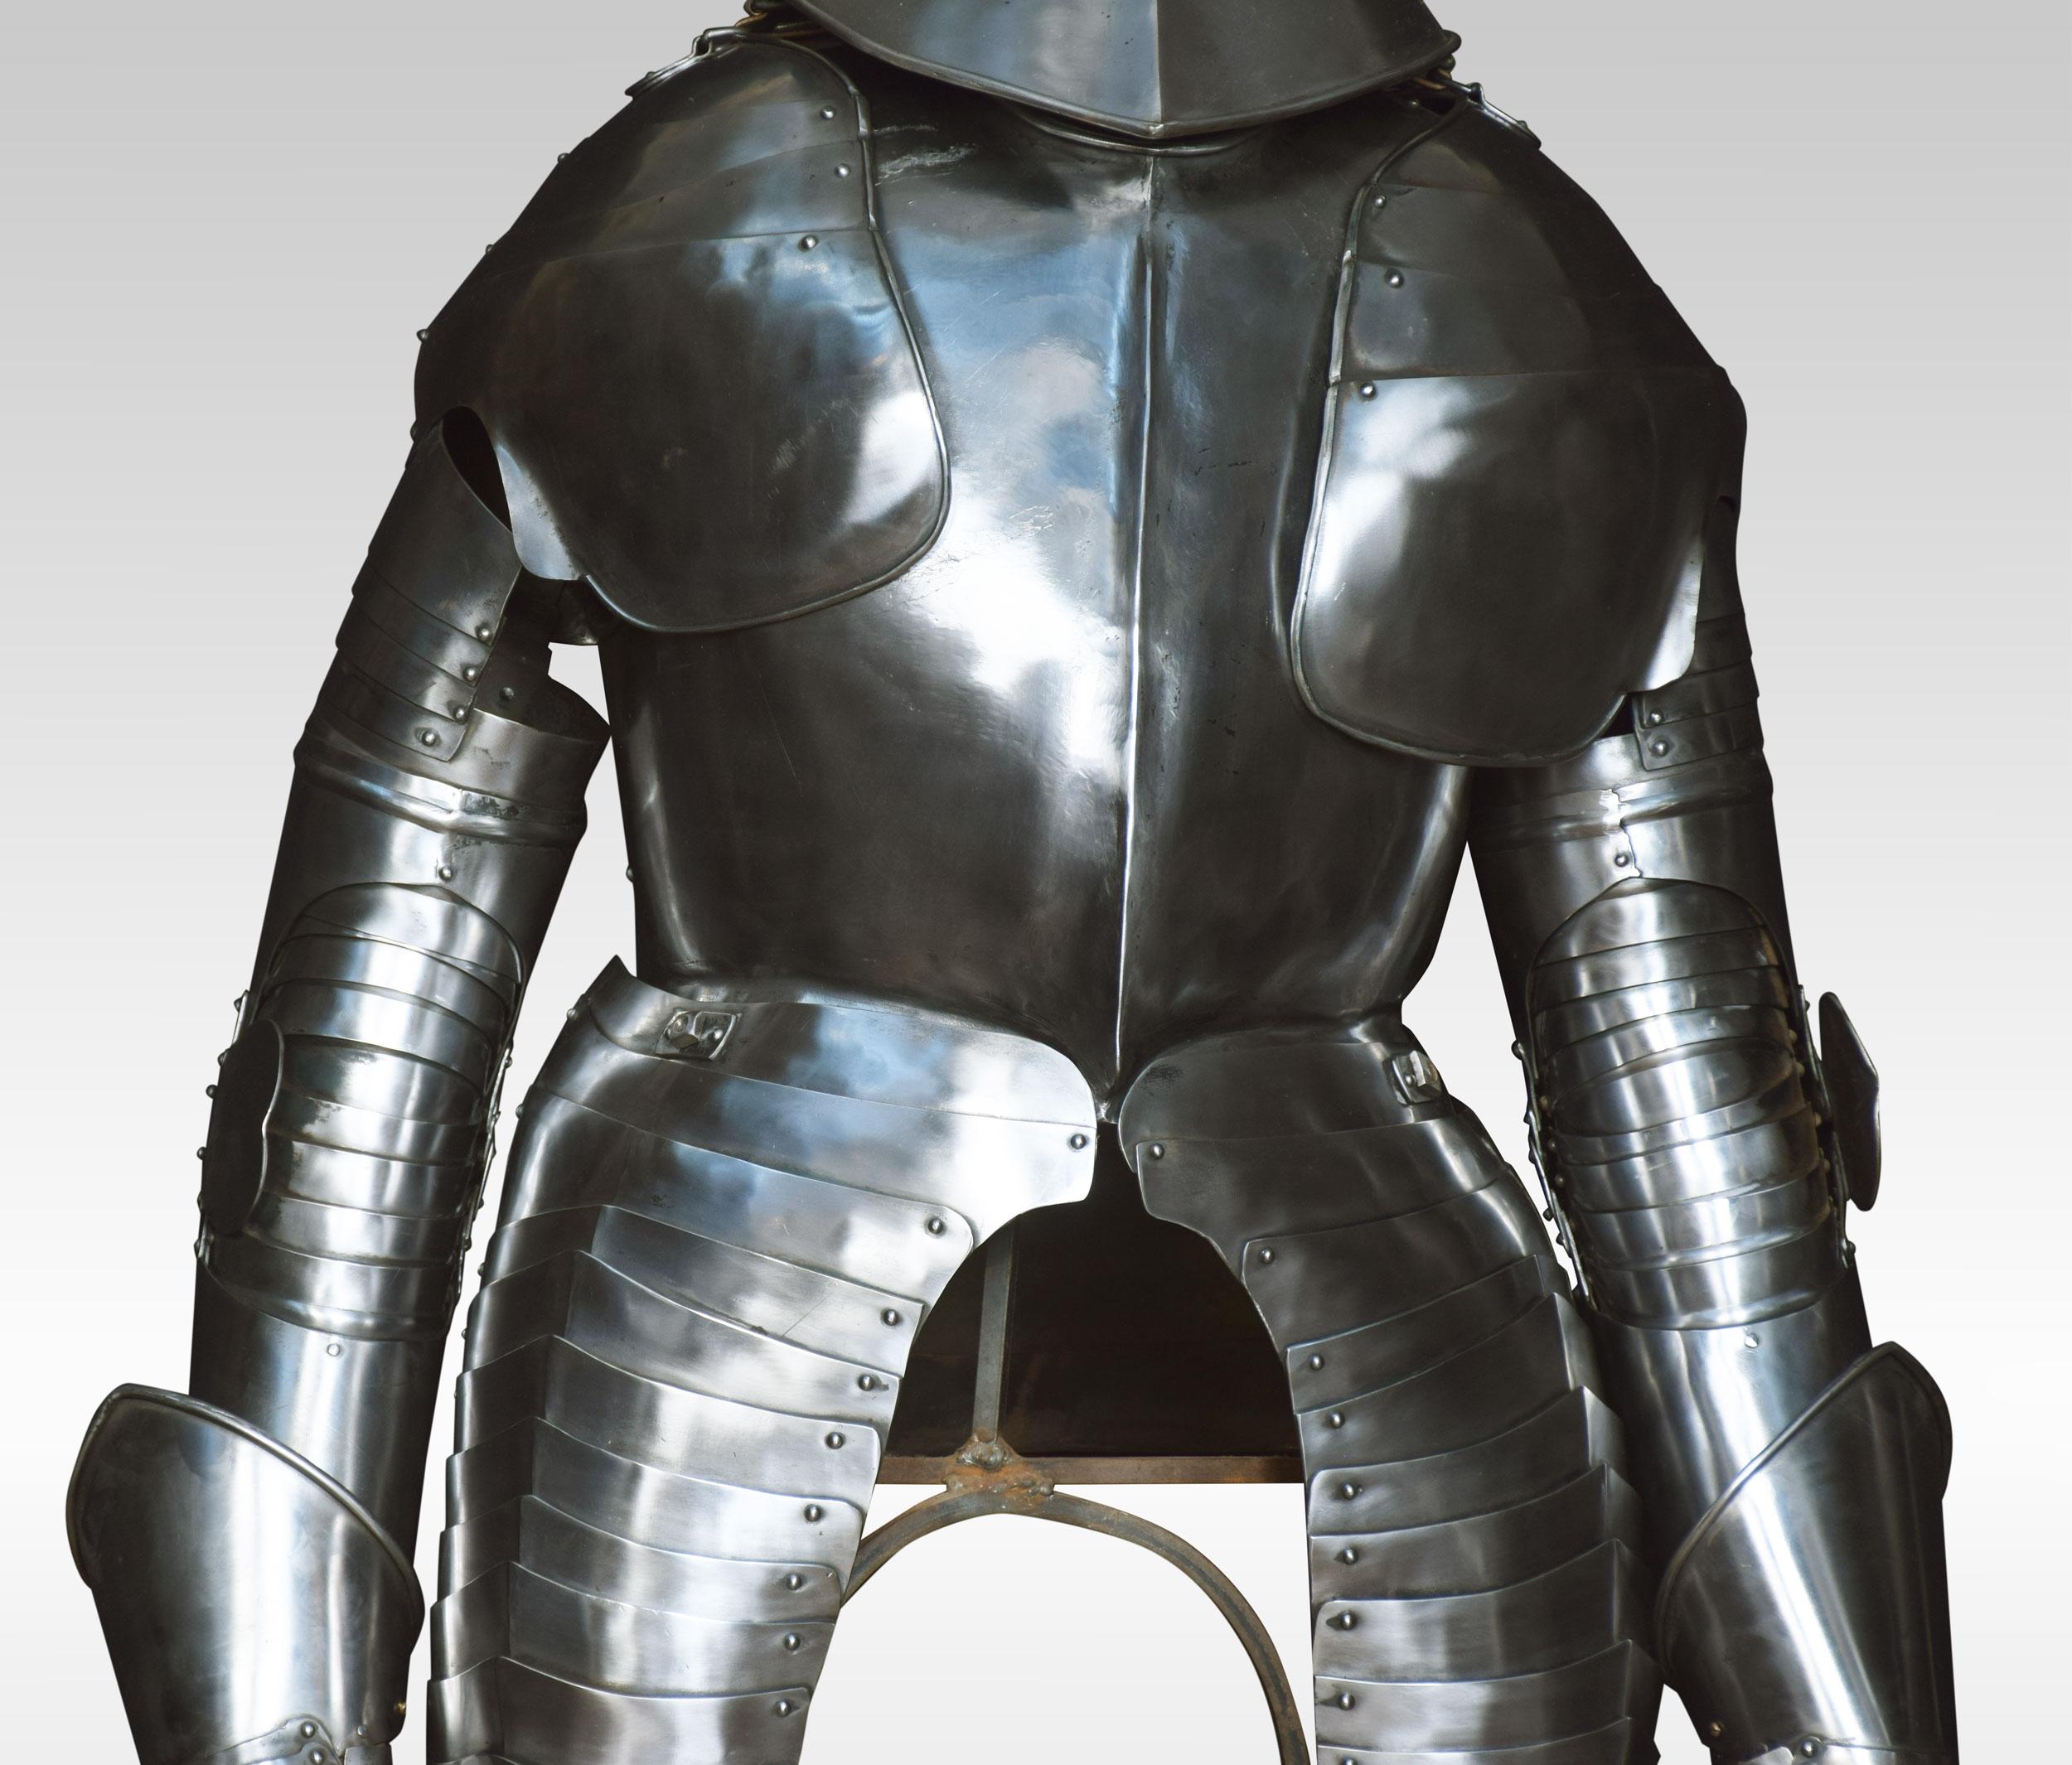 17th century armor